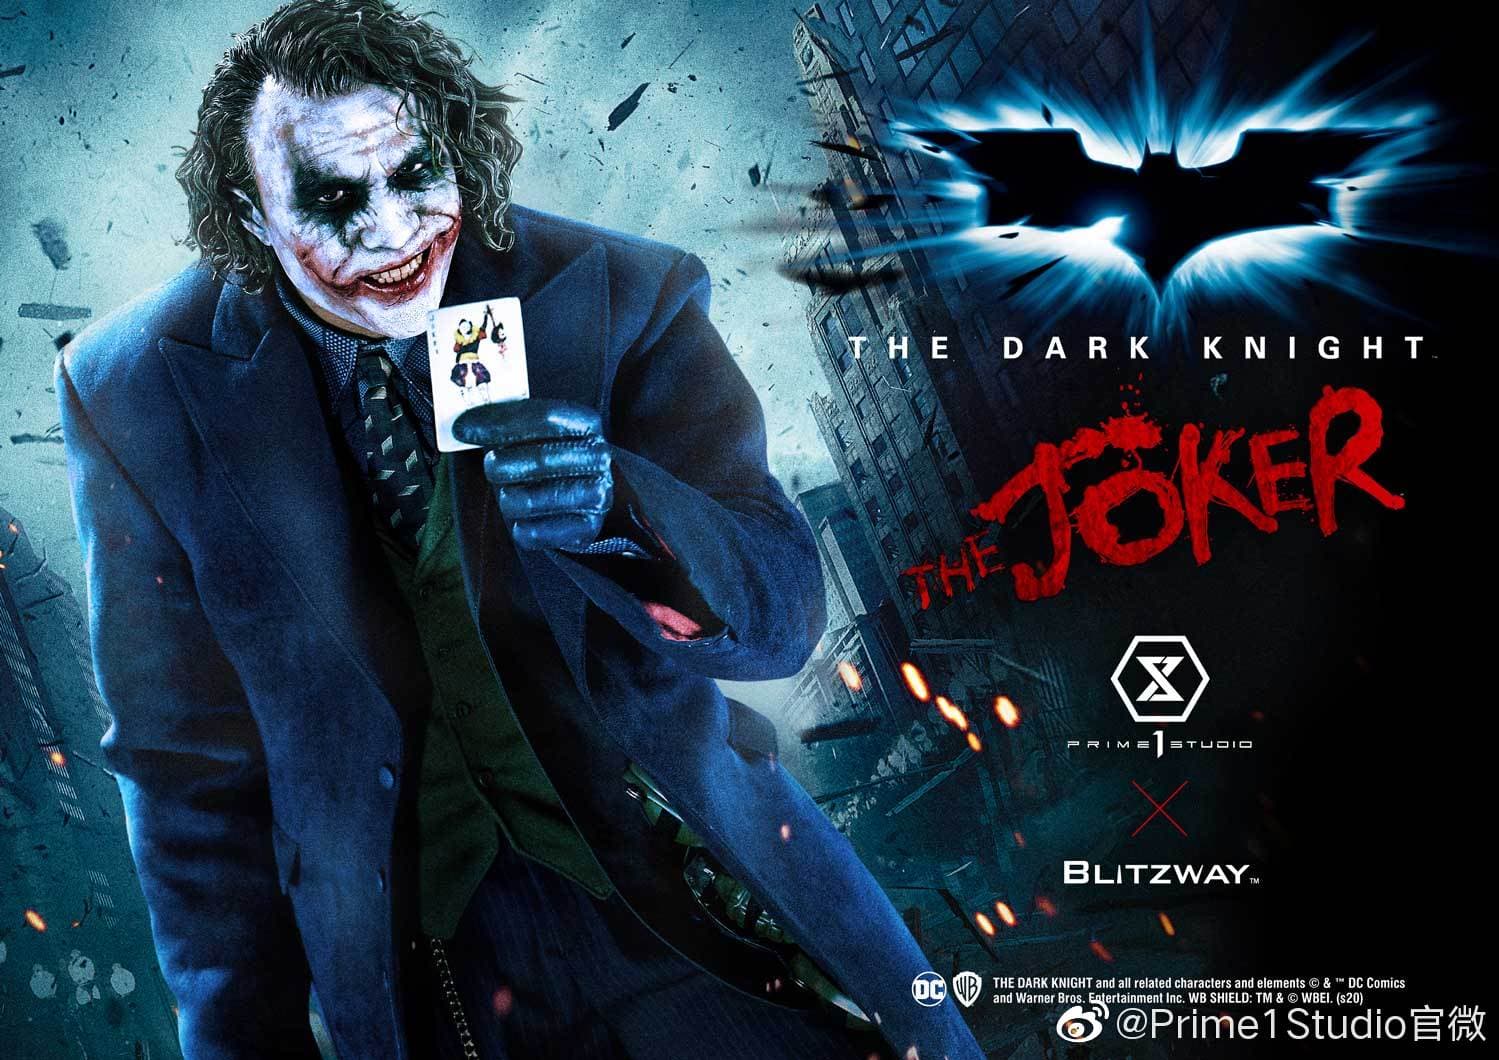 nolan)执导的蝙蝠侠作品:《黑暗骑士》(the dark knight,2008)的小丑